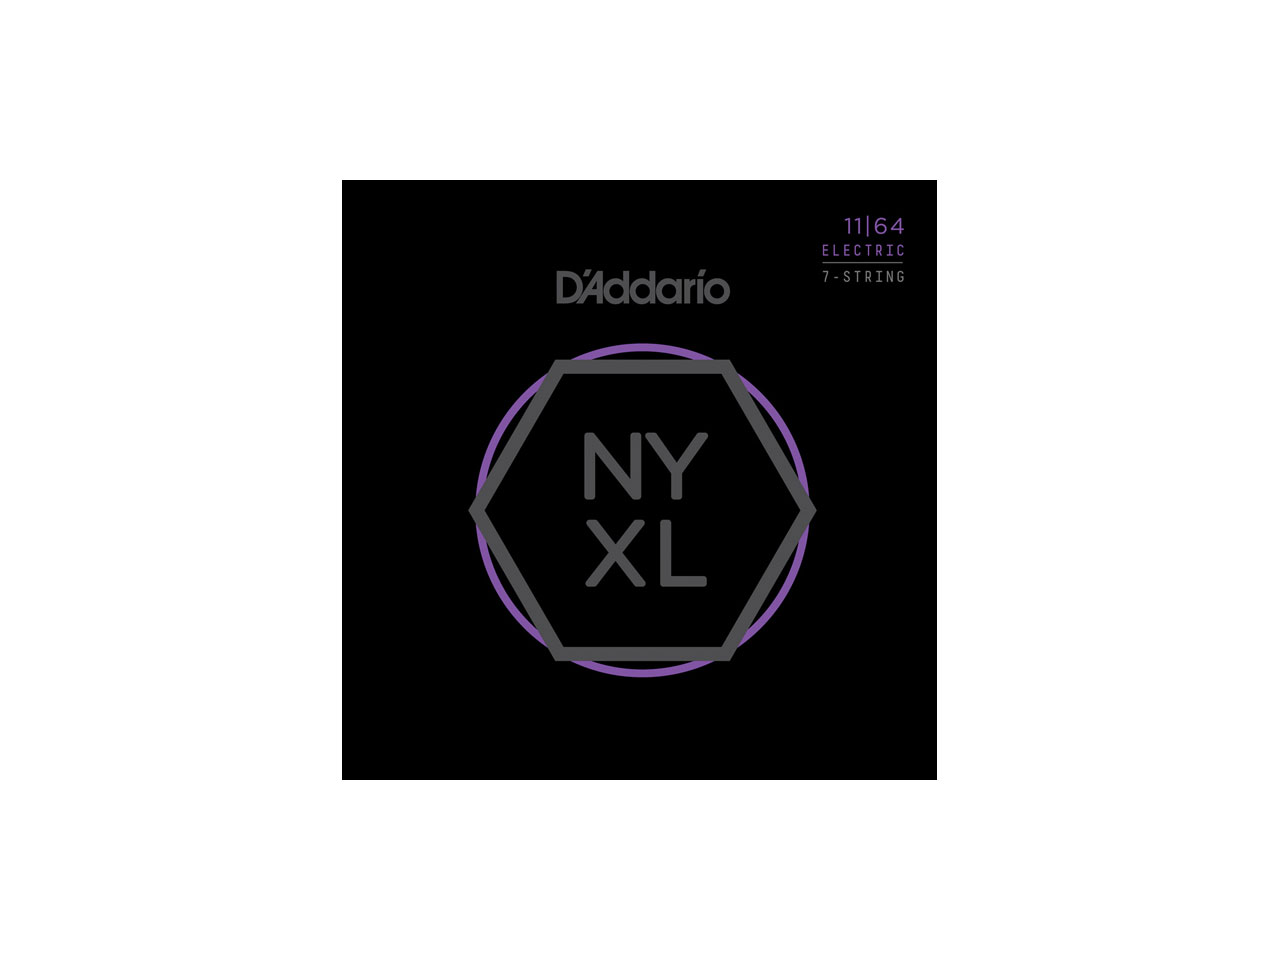 D'Addario(ダダリオ) NYXL1164 Nickel Wound 7-String [Medium] (エレキギター弦/7弦用)